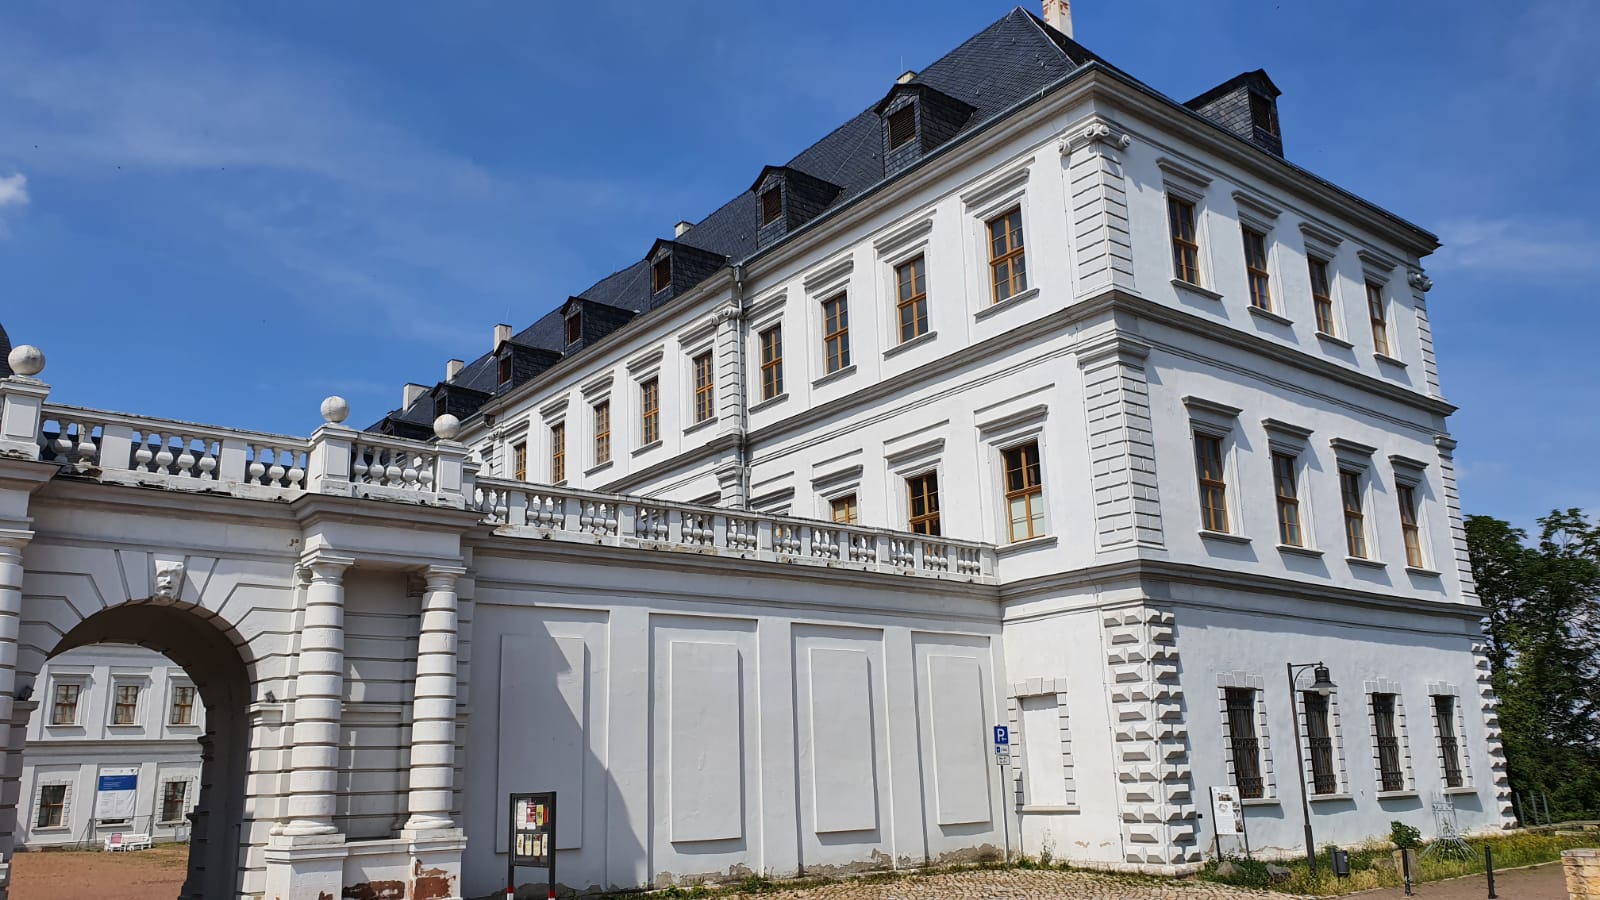 Virtueller Rundgang durch Schloss Neu Augustusburg in Weißenfels geplant